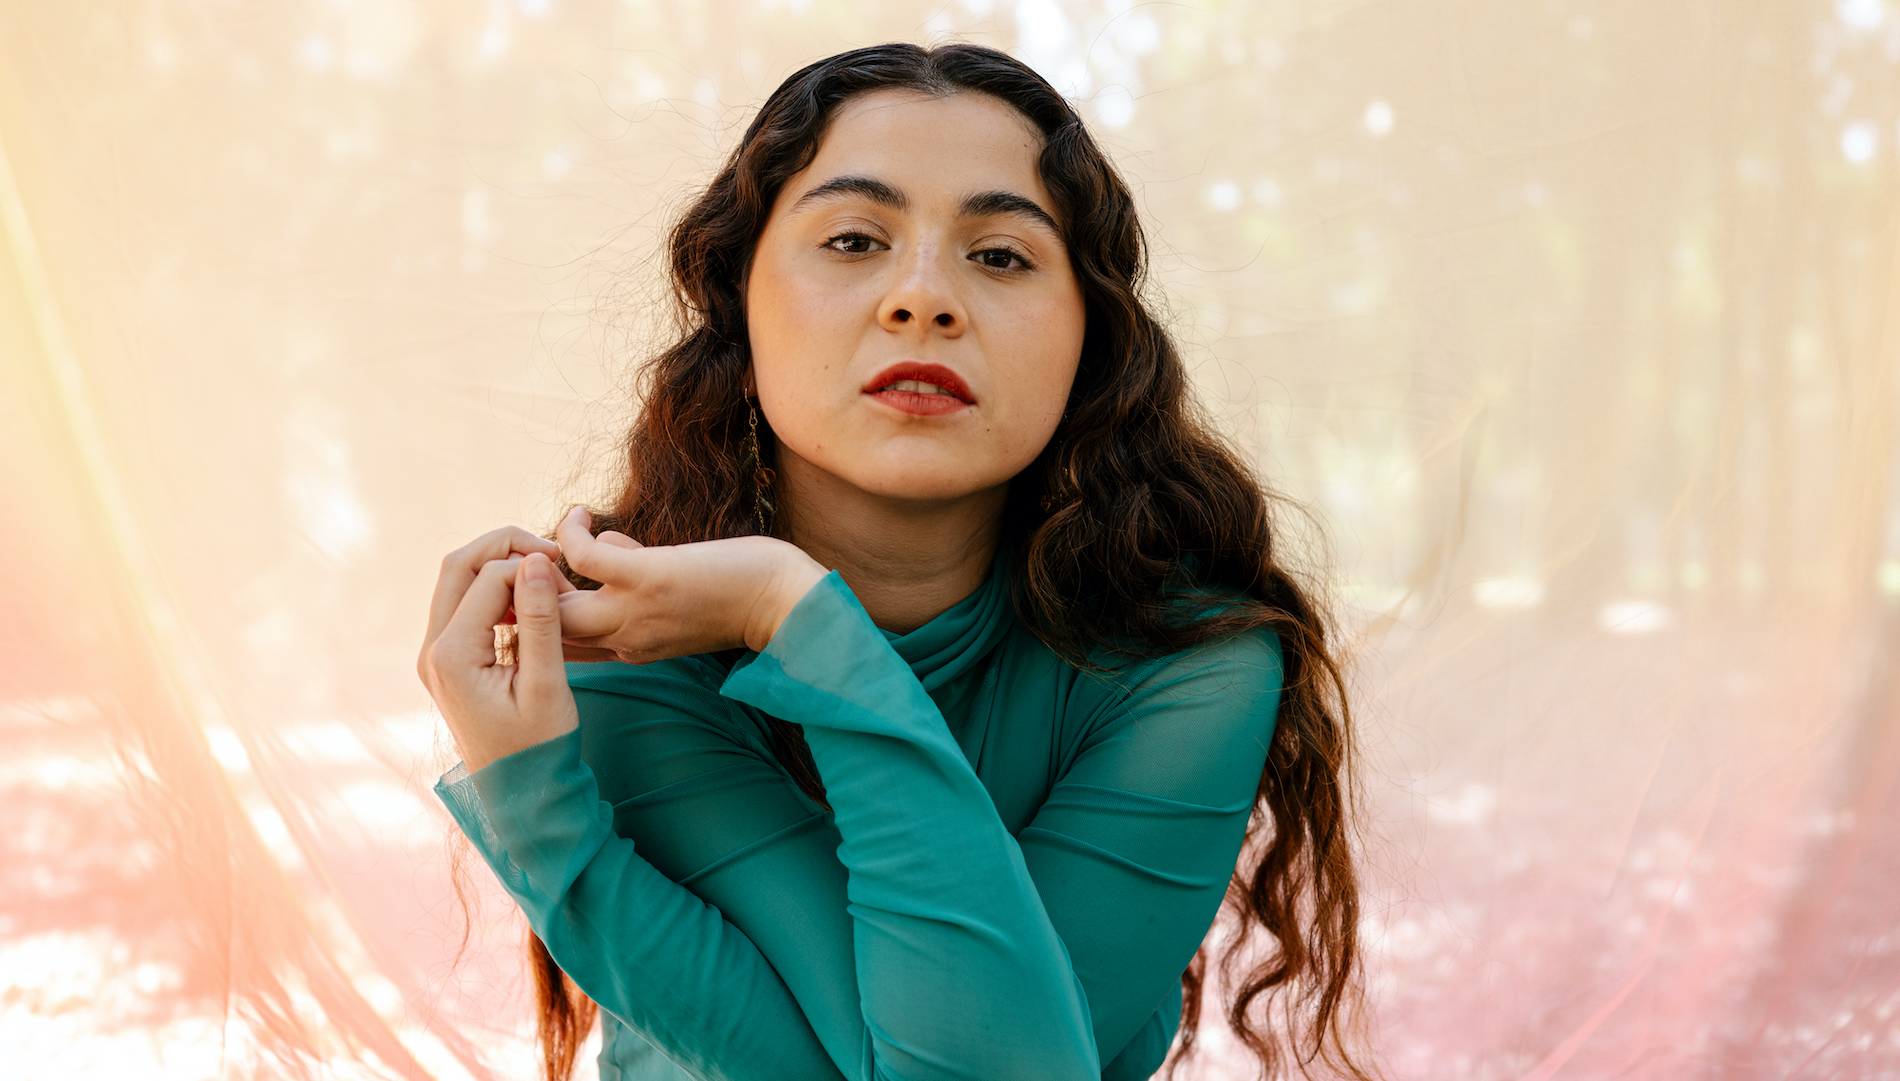 Polvo Engaño emergencia Silvana Estrada explica canción por canción de “Abrazo”, su nuevo álbum